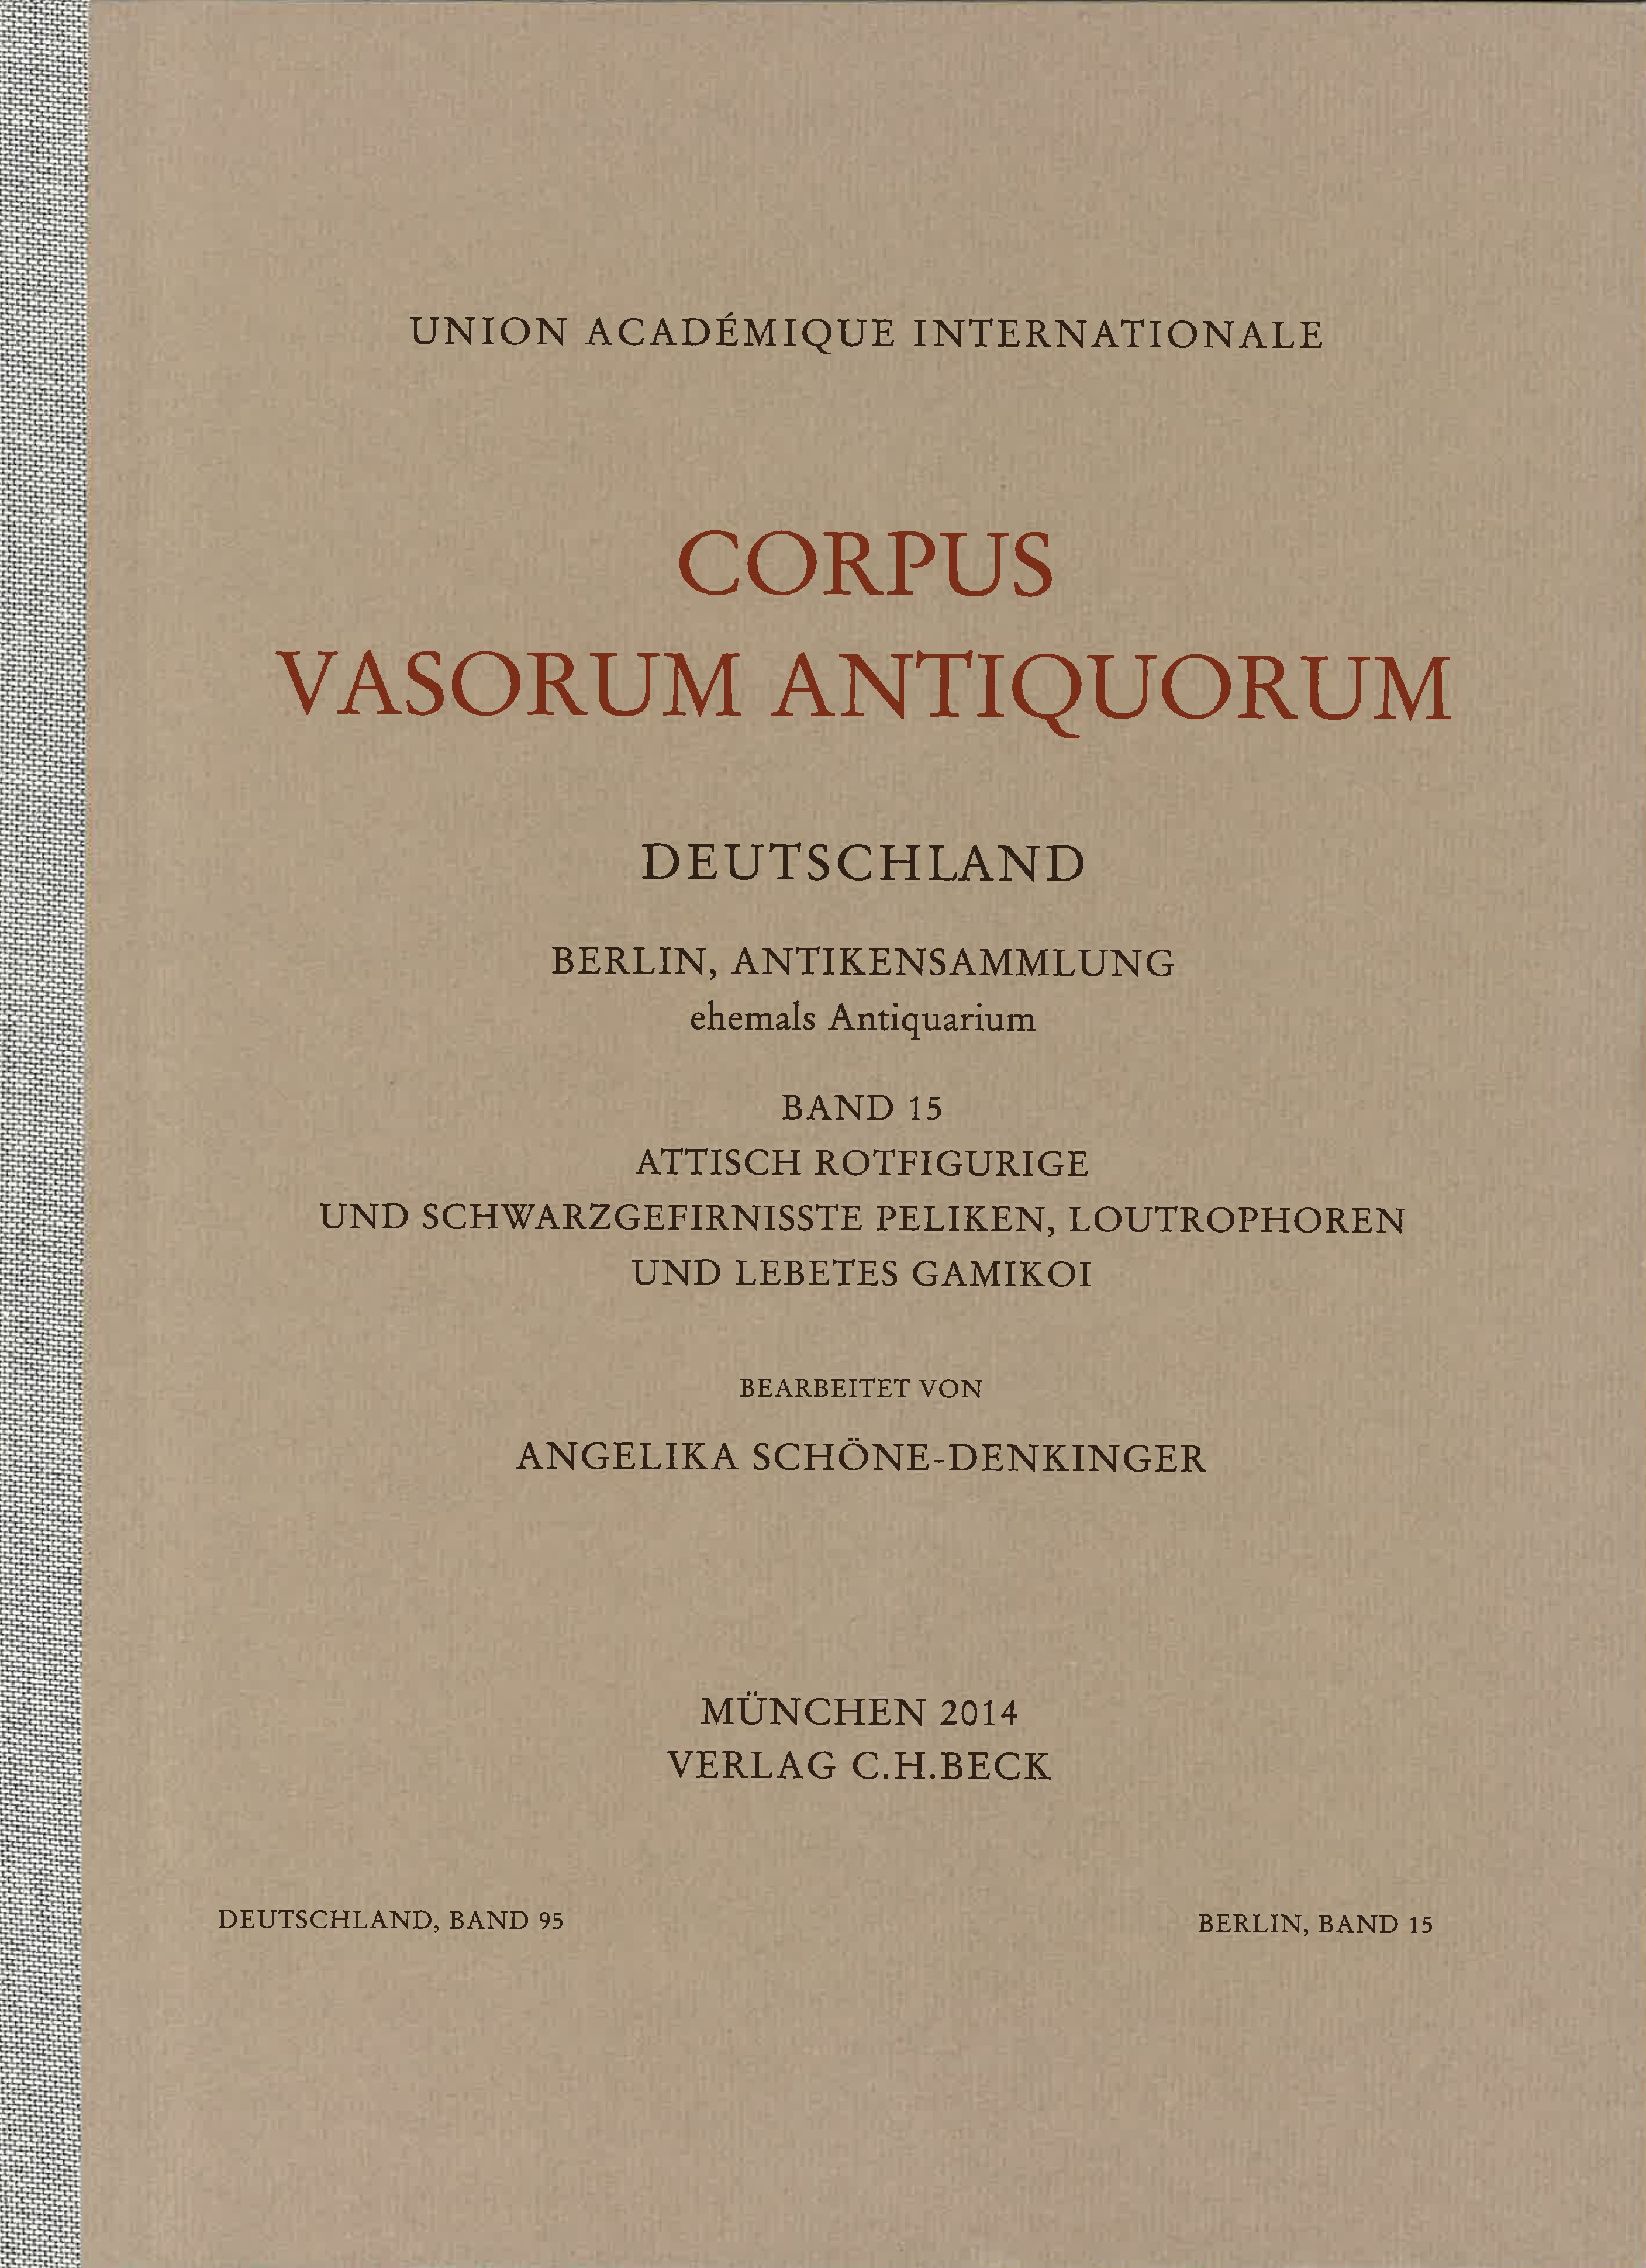 Cover: Schöne-Denkinger, Angelika, Corpus Vasorum Antiquorum Deutschland Bd. 95:  Berlin Band 15